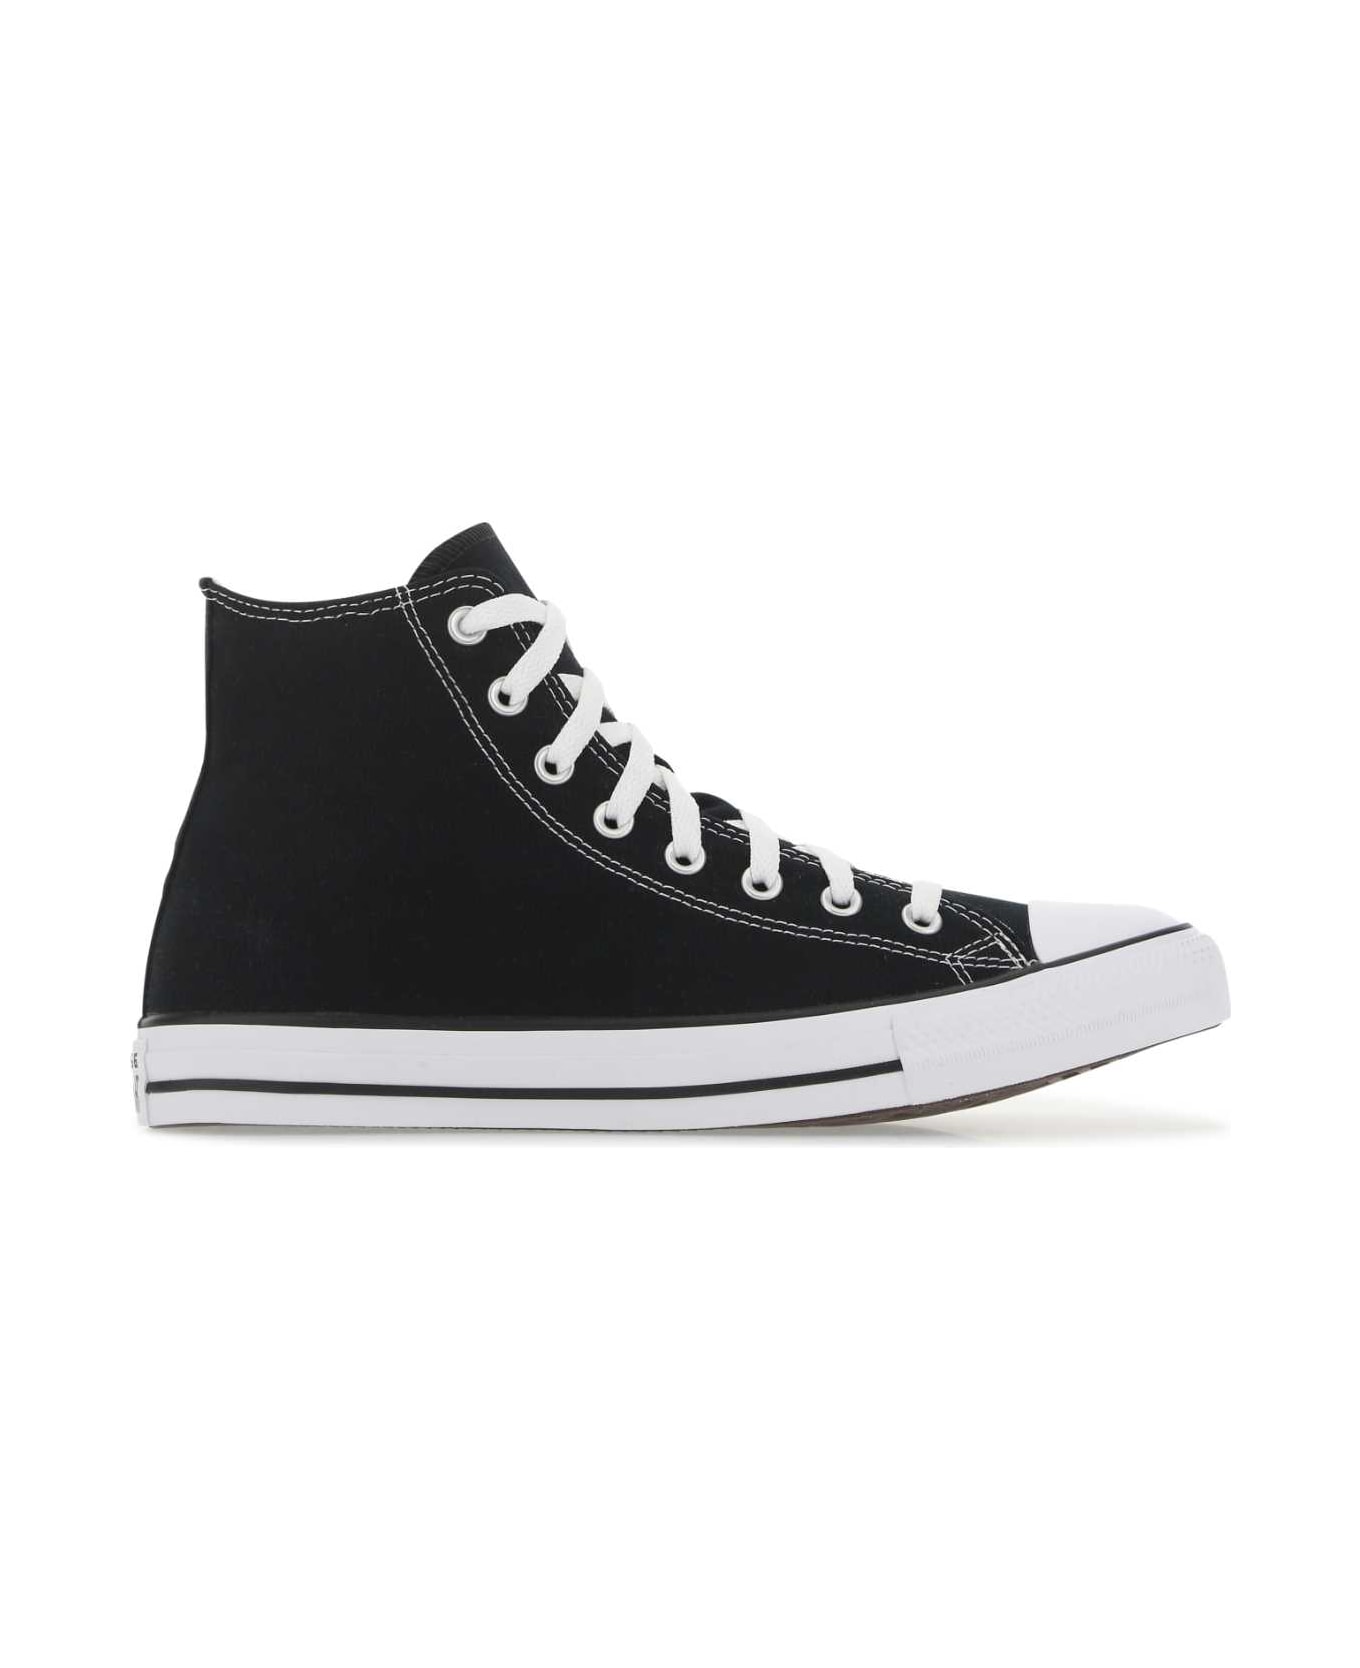 Converse Black Canvas Chuck Taylor Hi Sneakers - BLACK